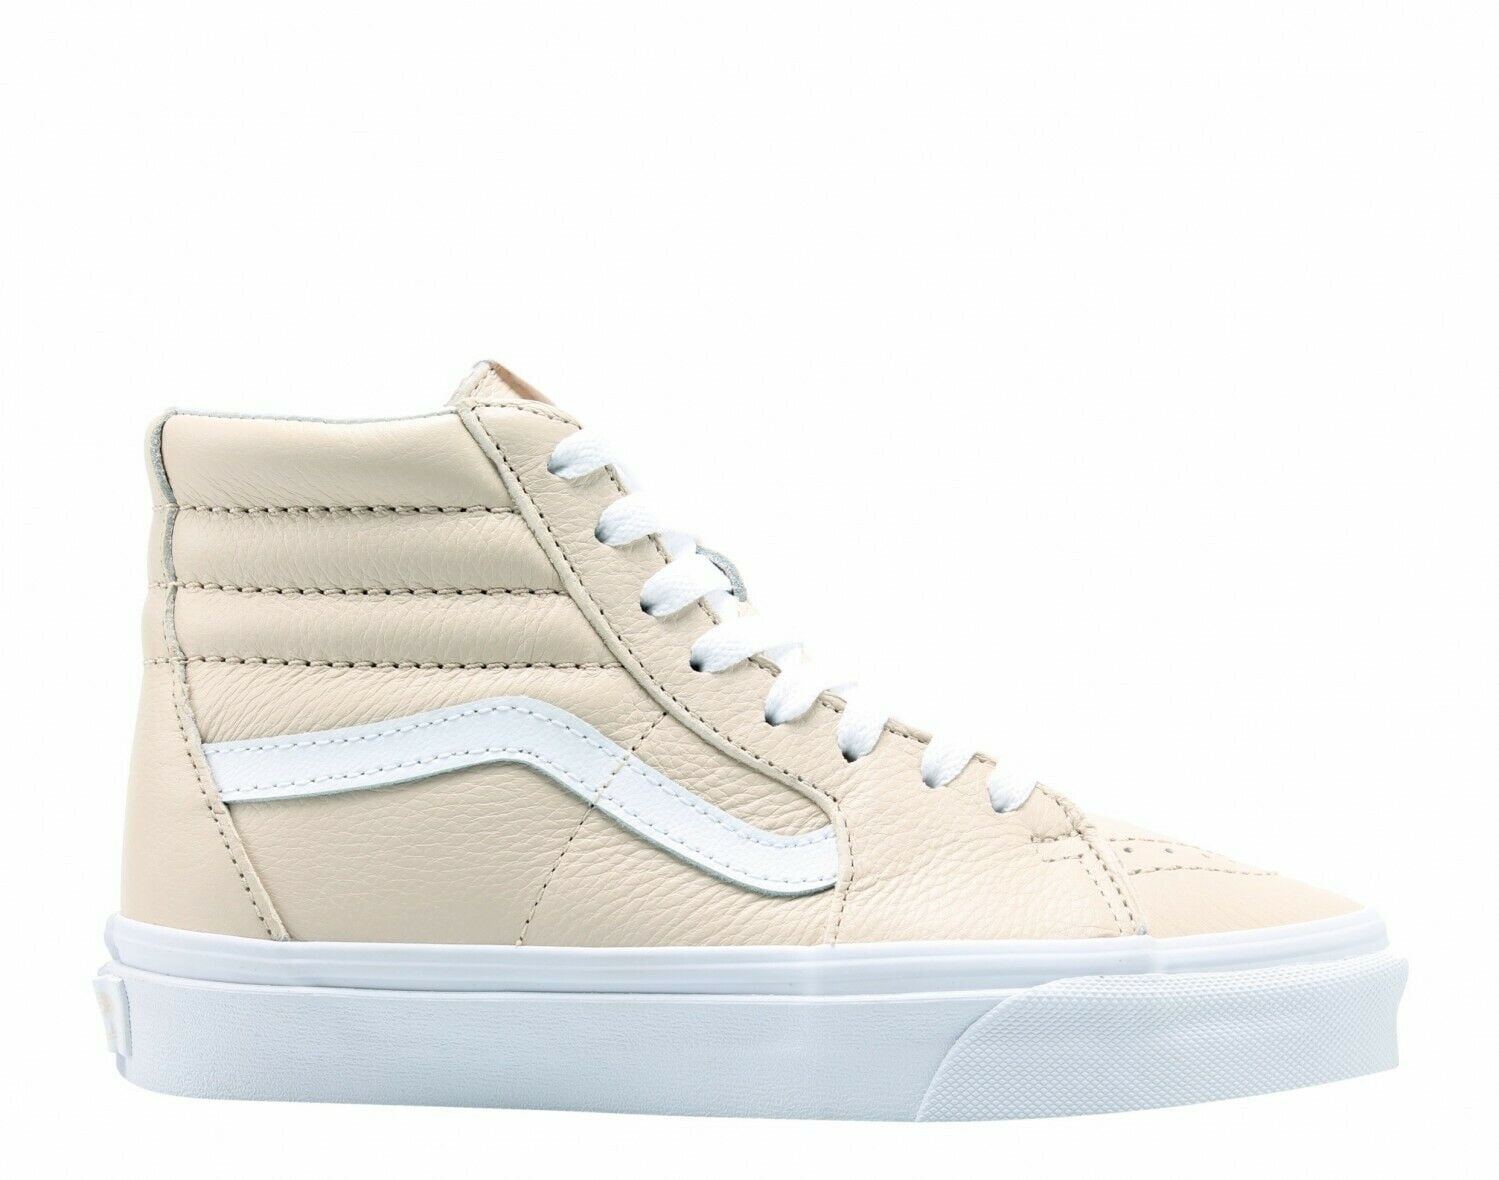 Vans SK8 Hi Leather Sand Dollar Men's Classic Skate Shoes Size 7.5 ...